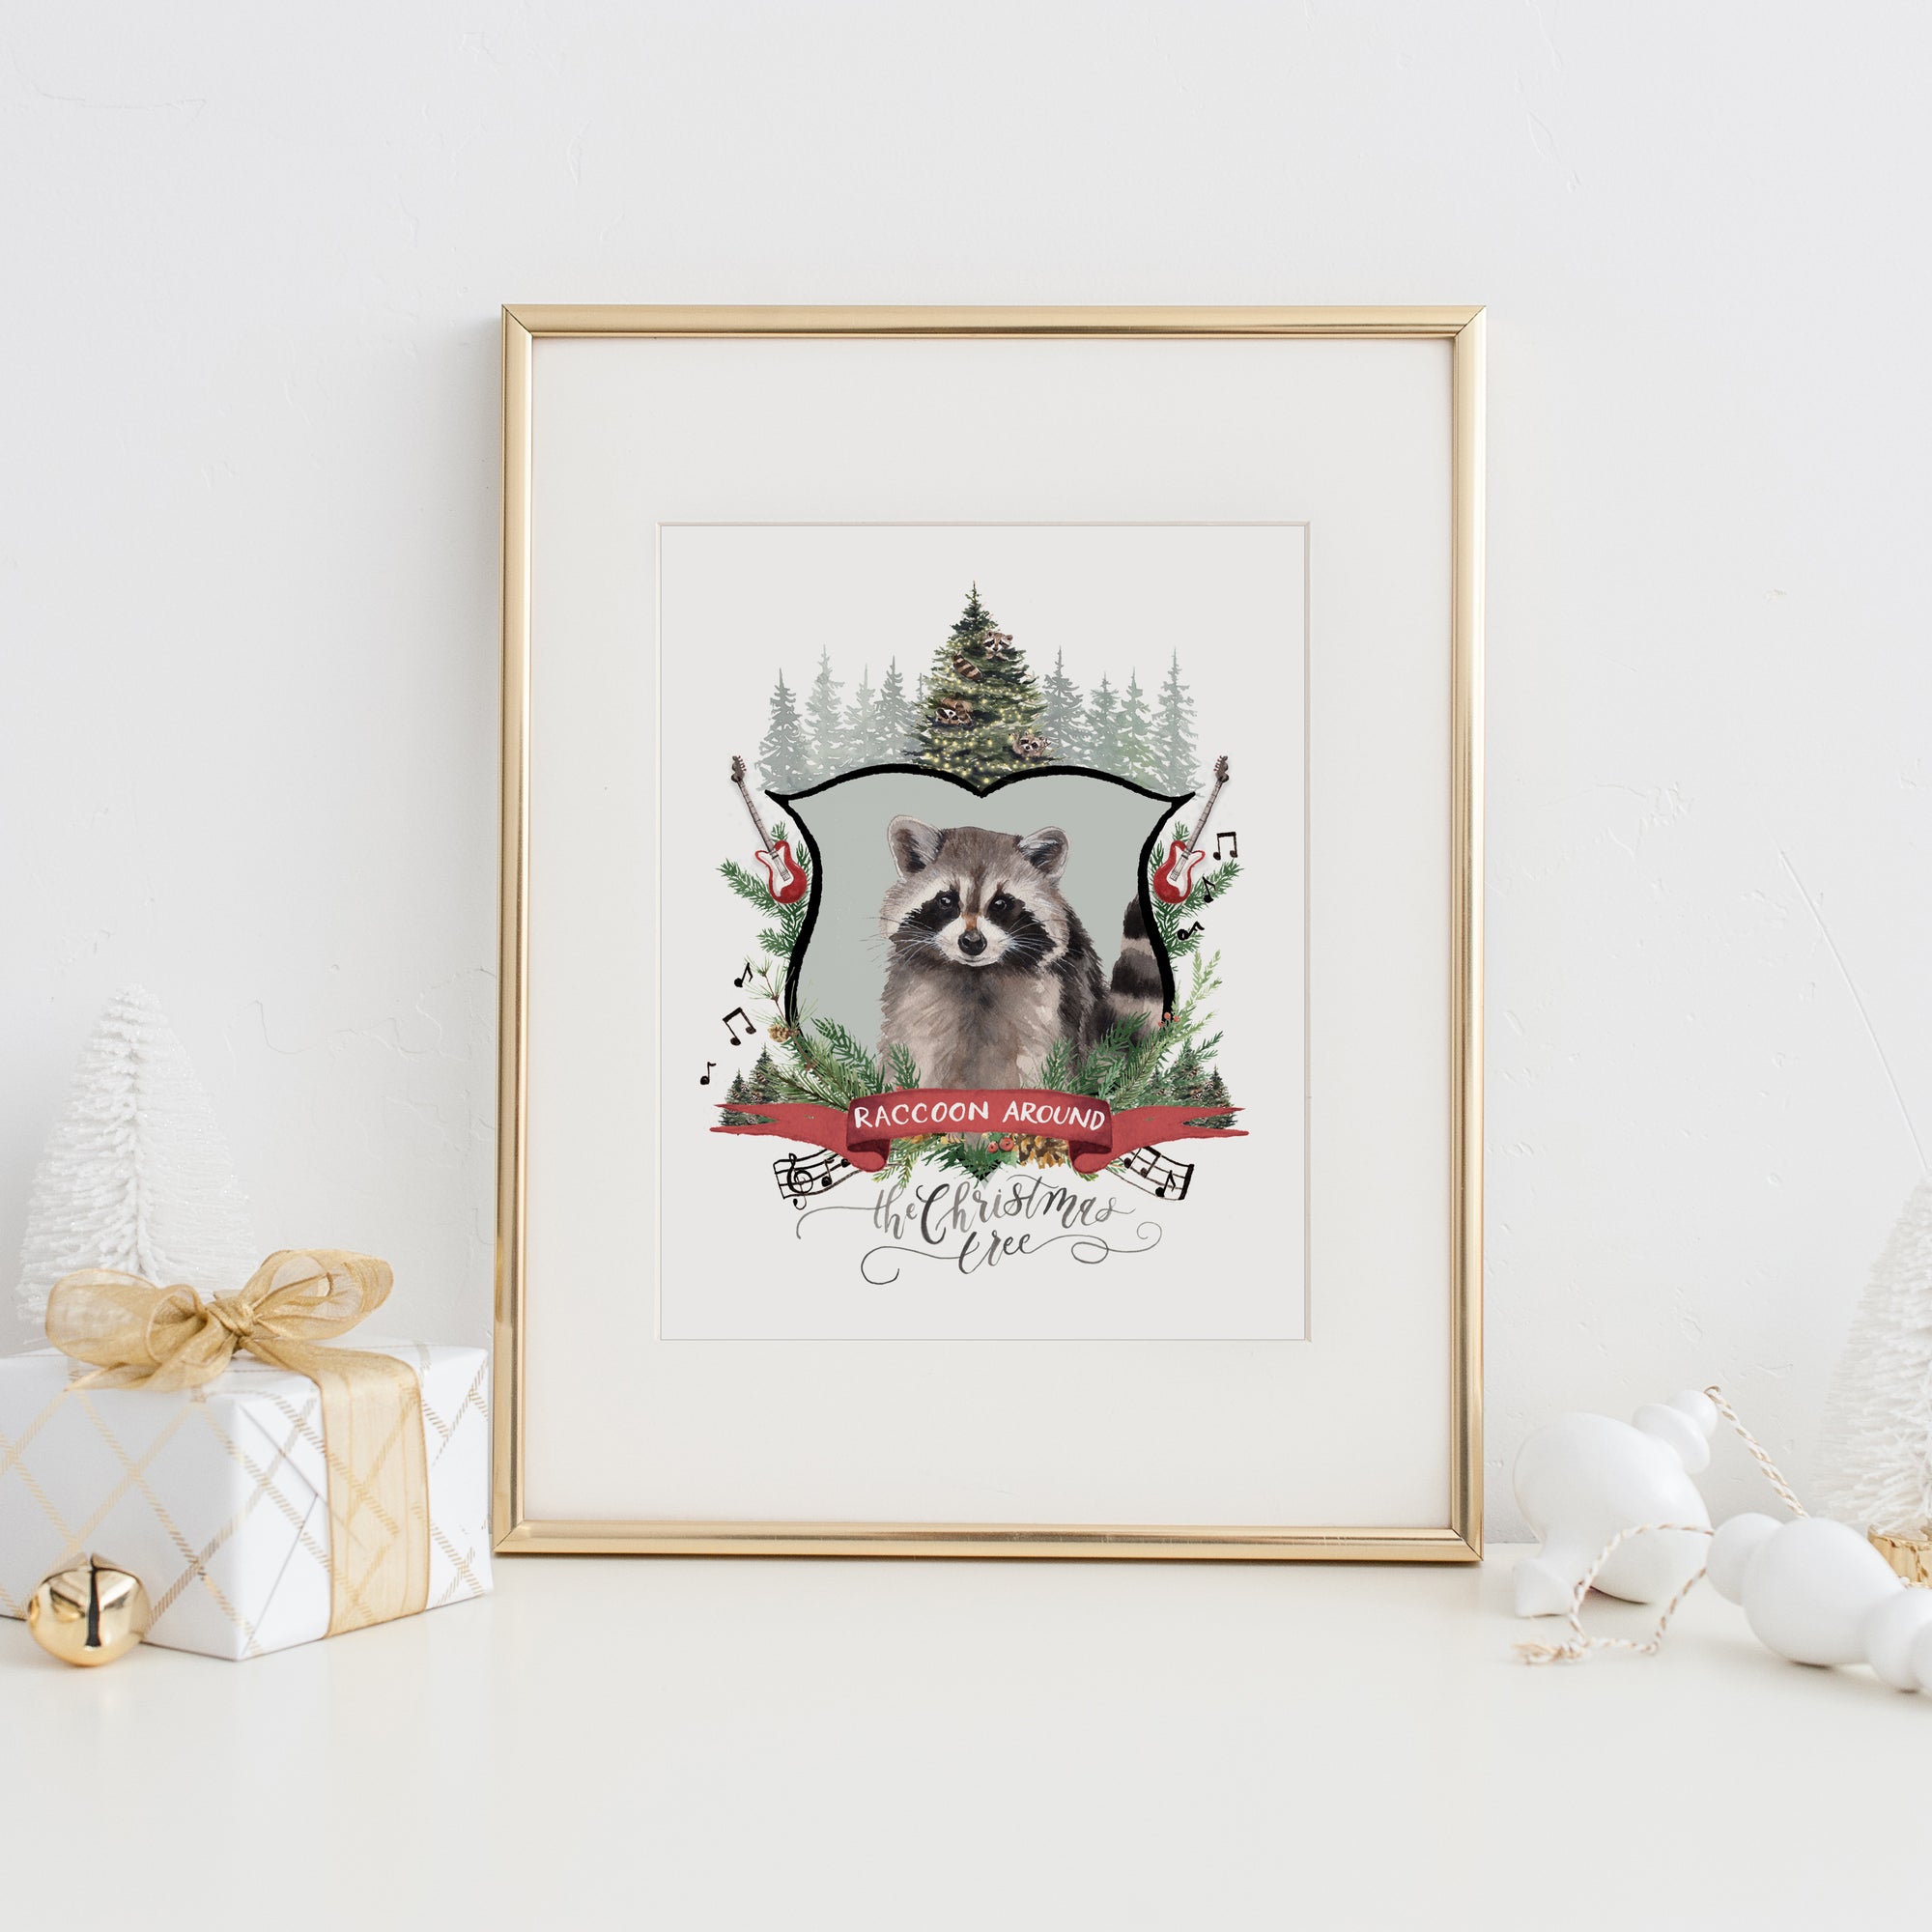 Raccoon Around the Christmas Tree Art Print